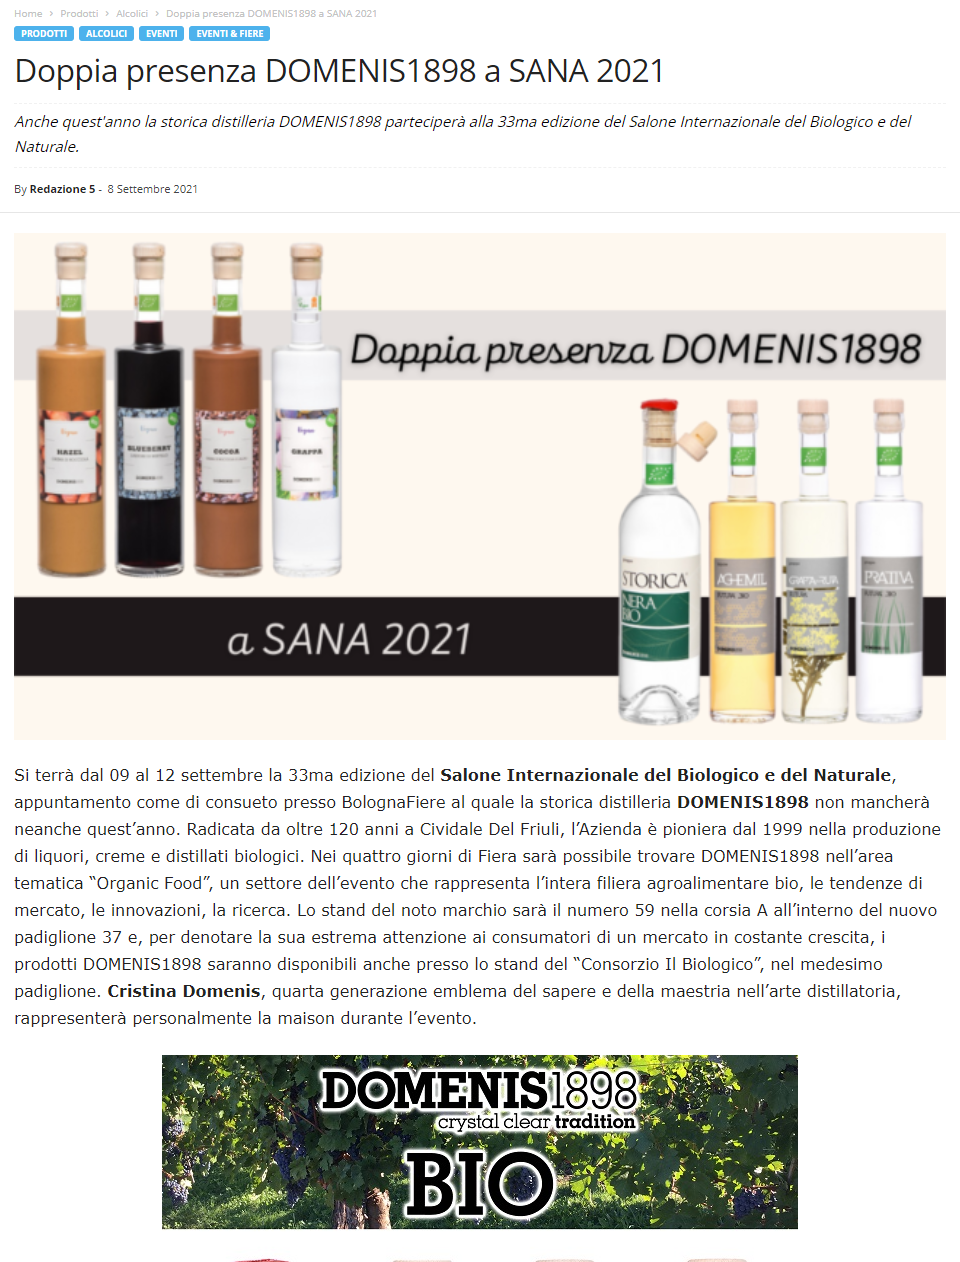 2021 settembre 08: Horecanews.it – Doppia presenza DOMENIS1898 a SANA 2021